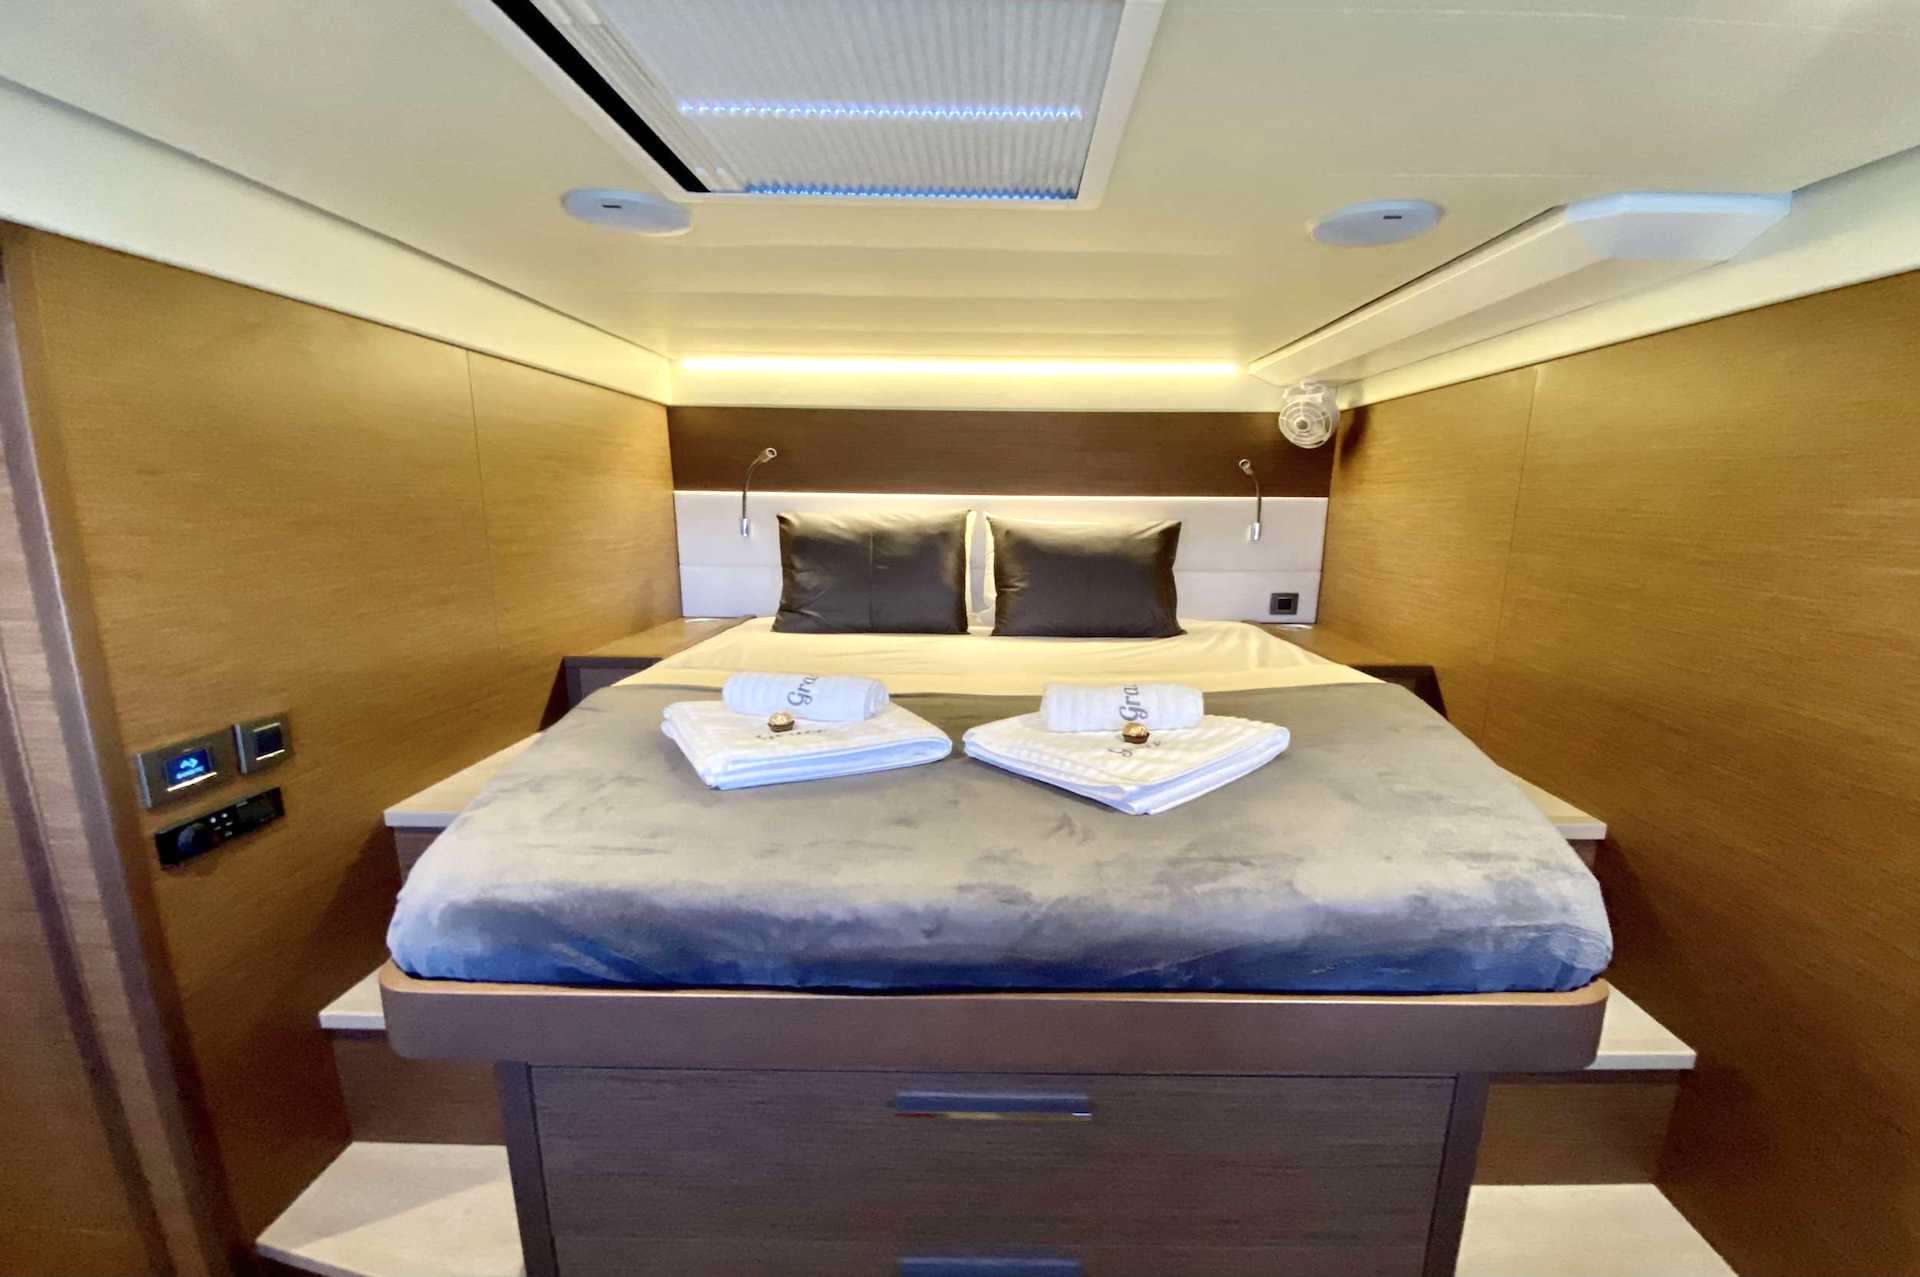 yacht charter Grace double cabin